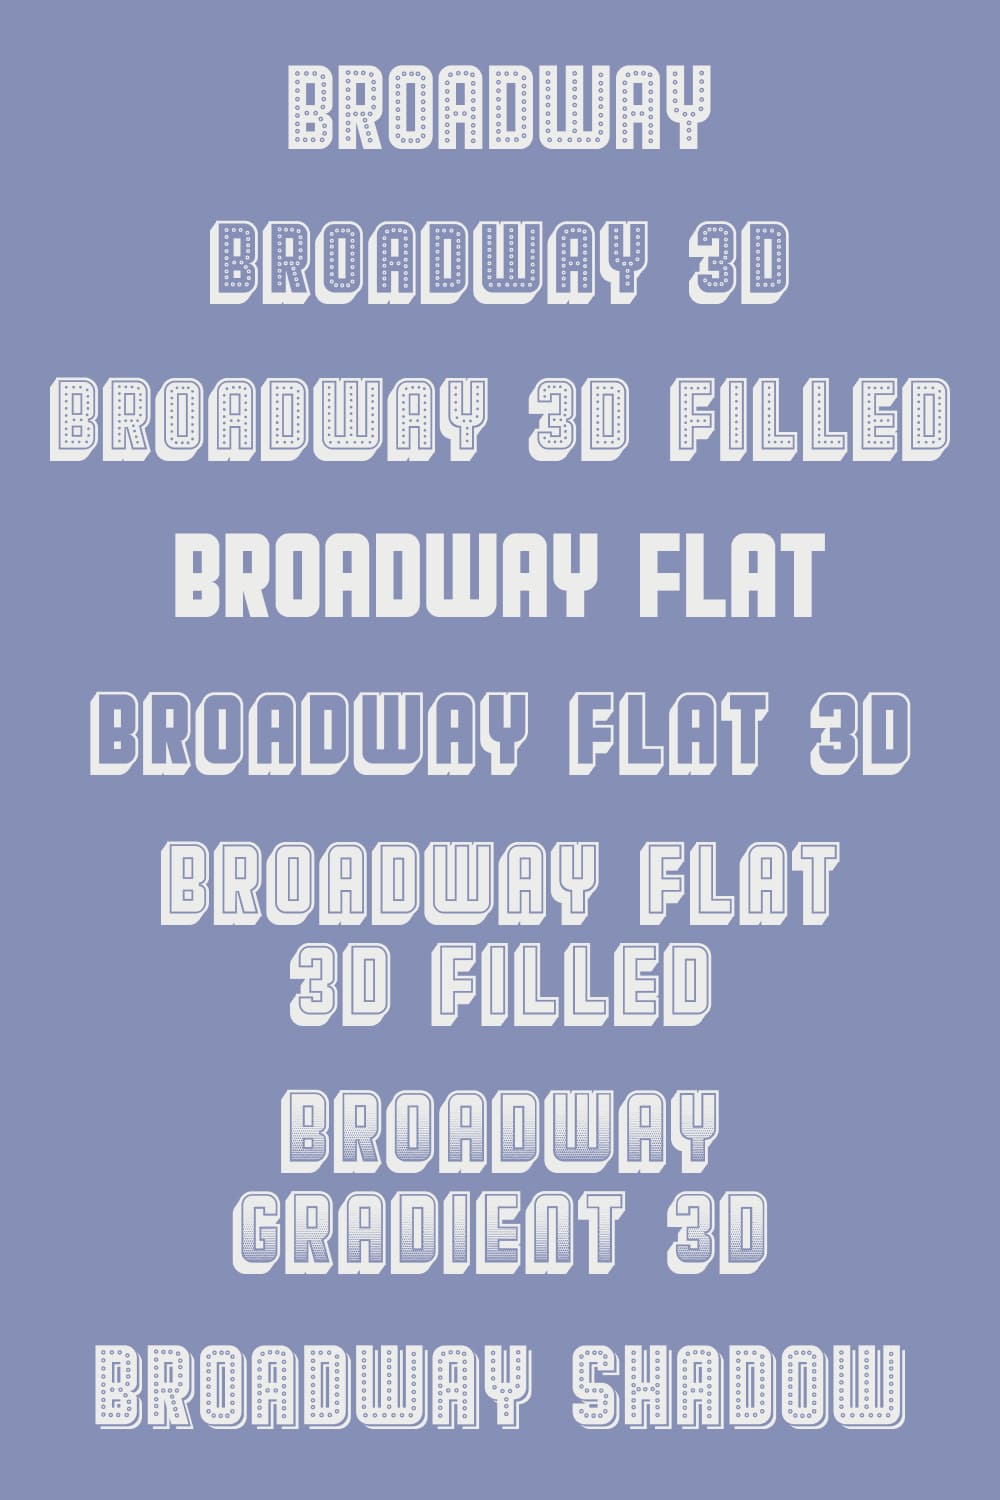 Free broadway font - Pinterest.